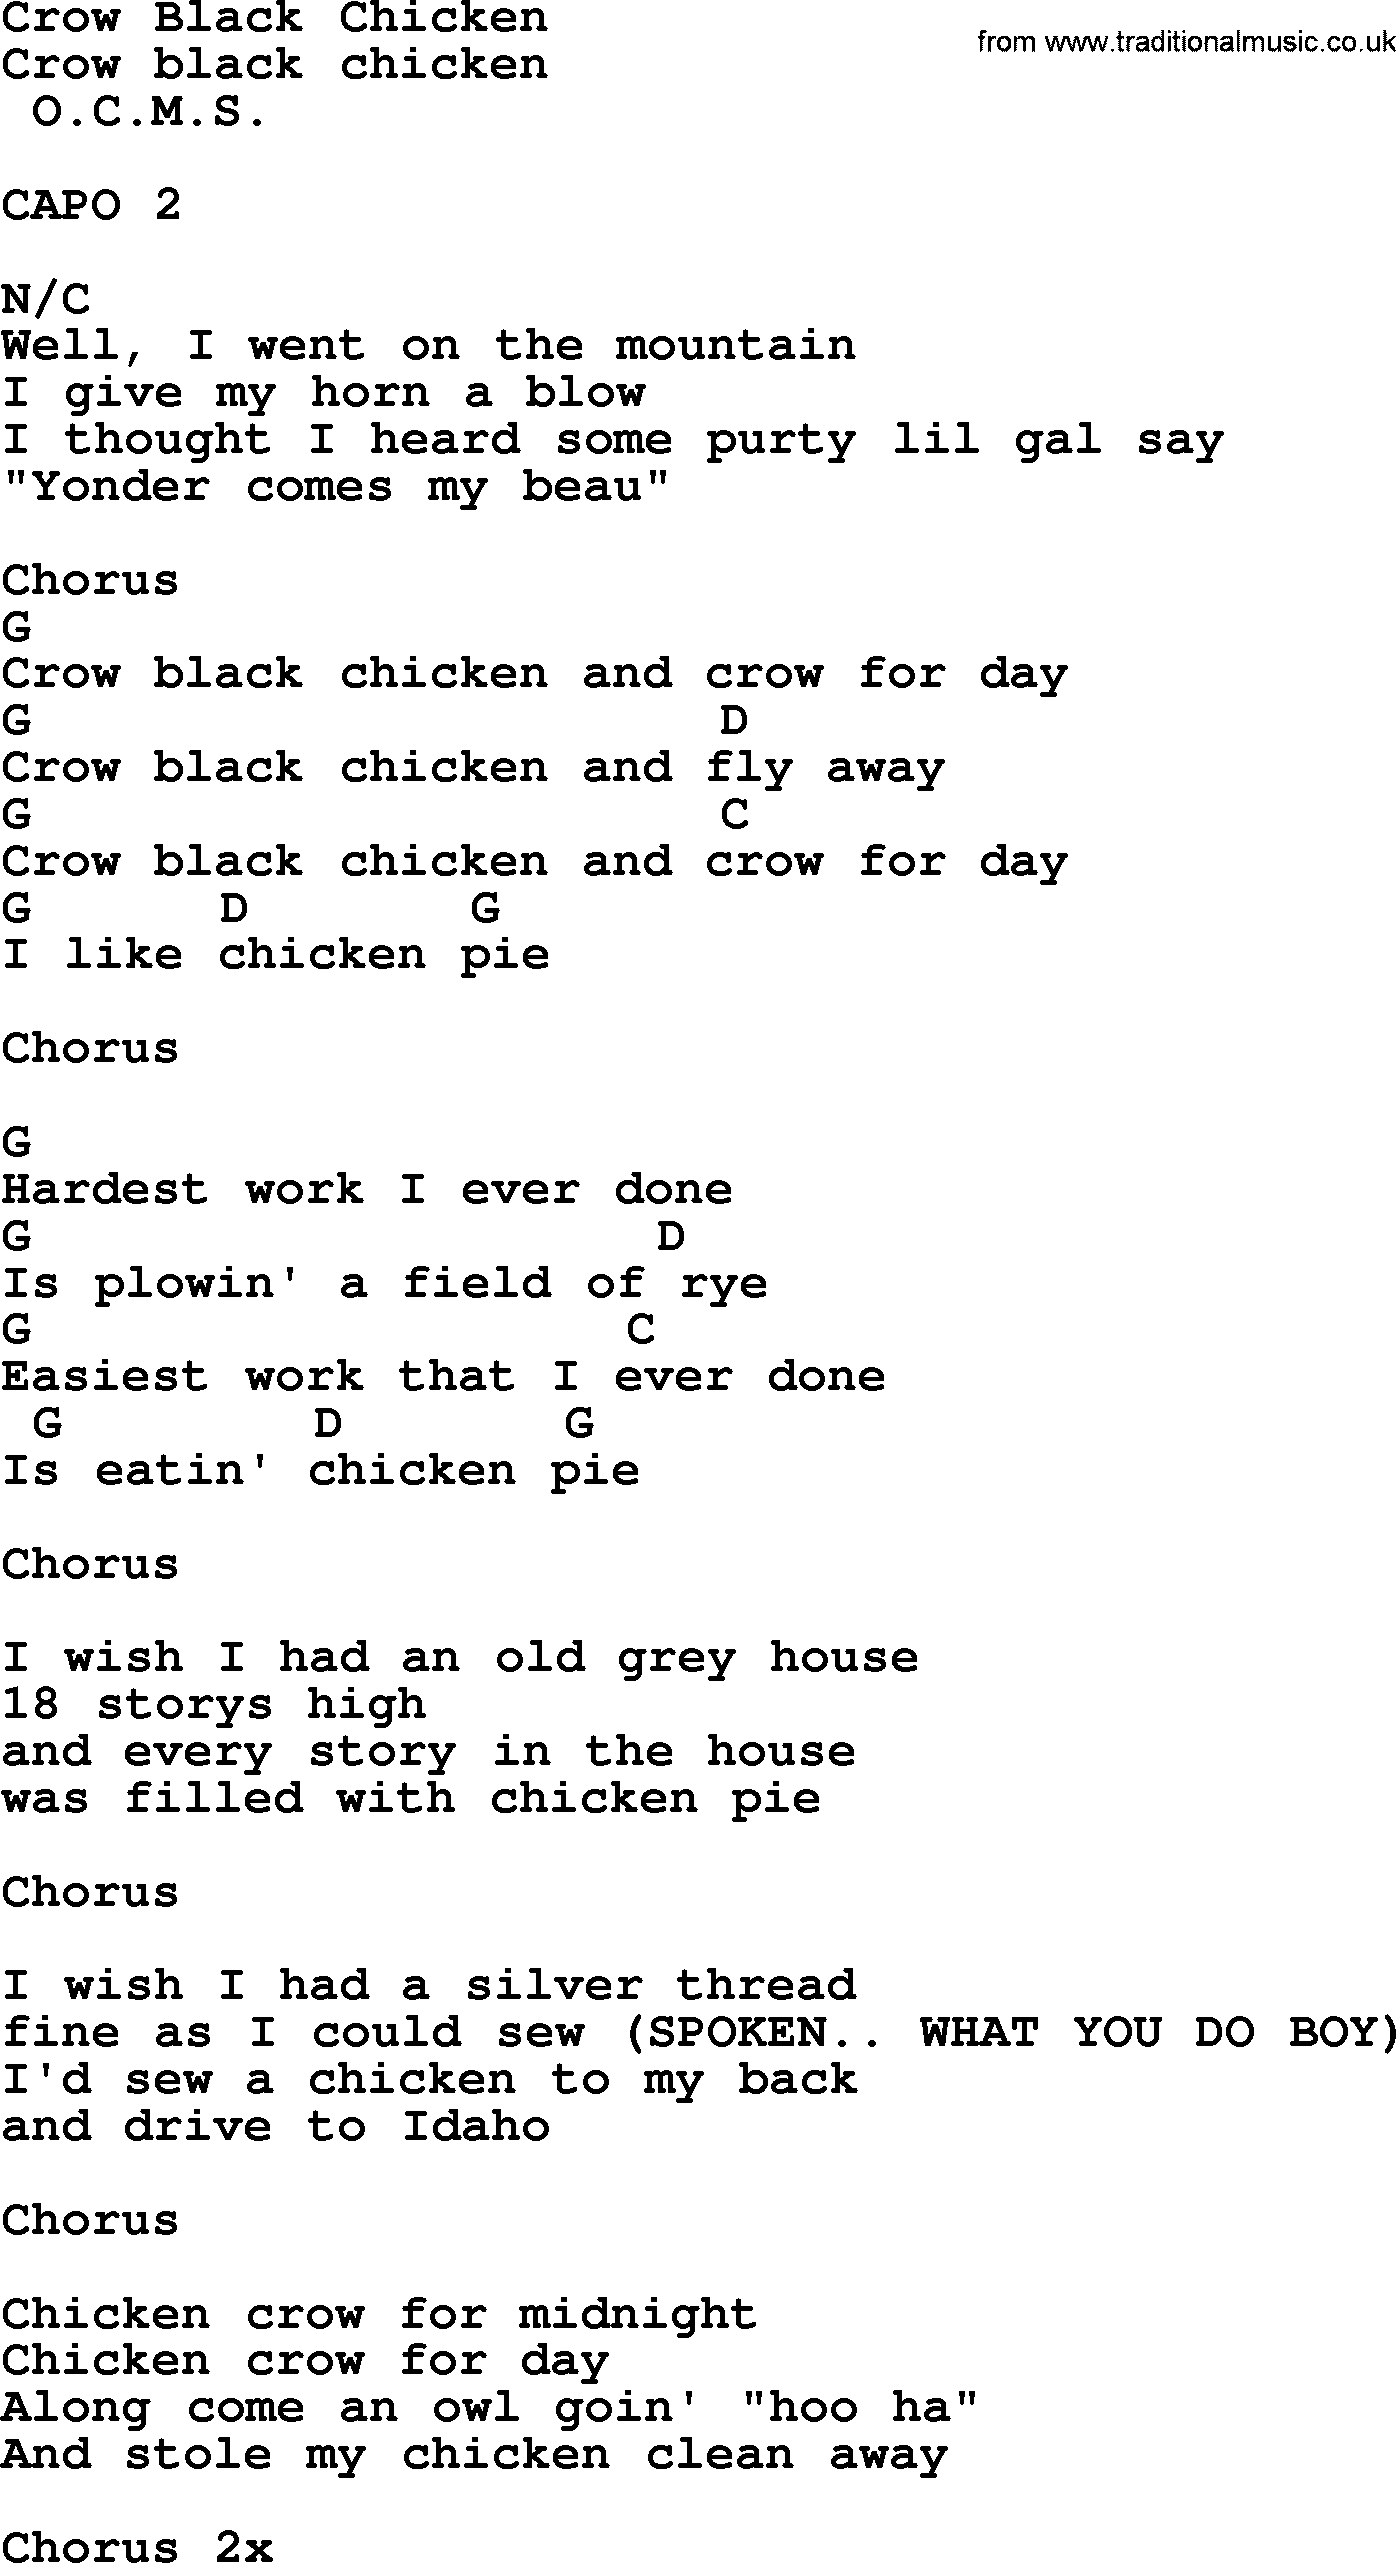 Bluegrass song: Crow Black Chicken, lyrics and chords